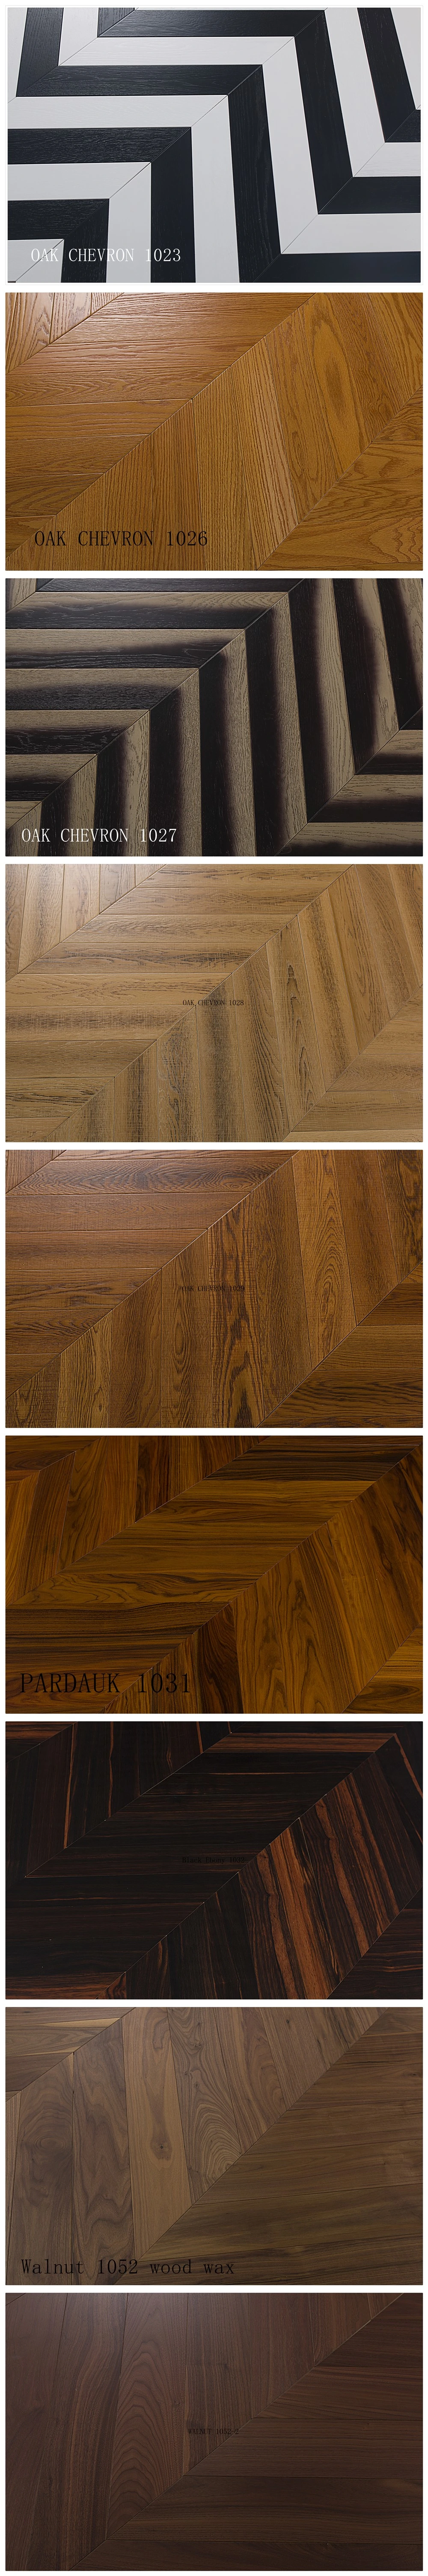 Engineered Wood Flooring, Multi-Layers, Walnut Species, 510*92*15mm, Spot Goods.